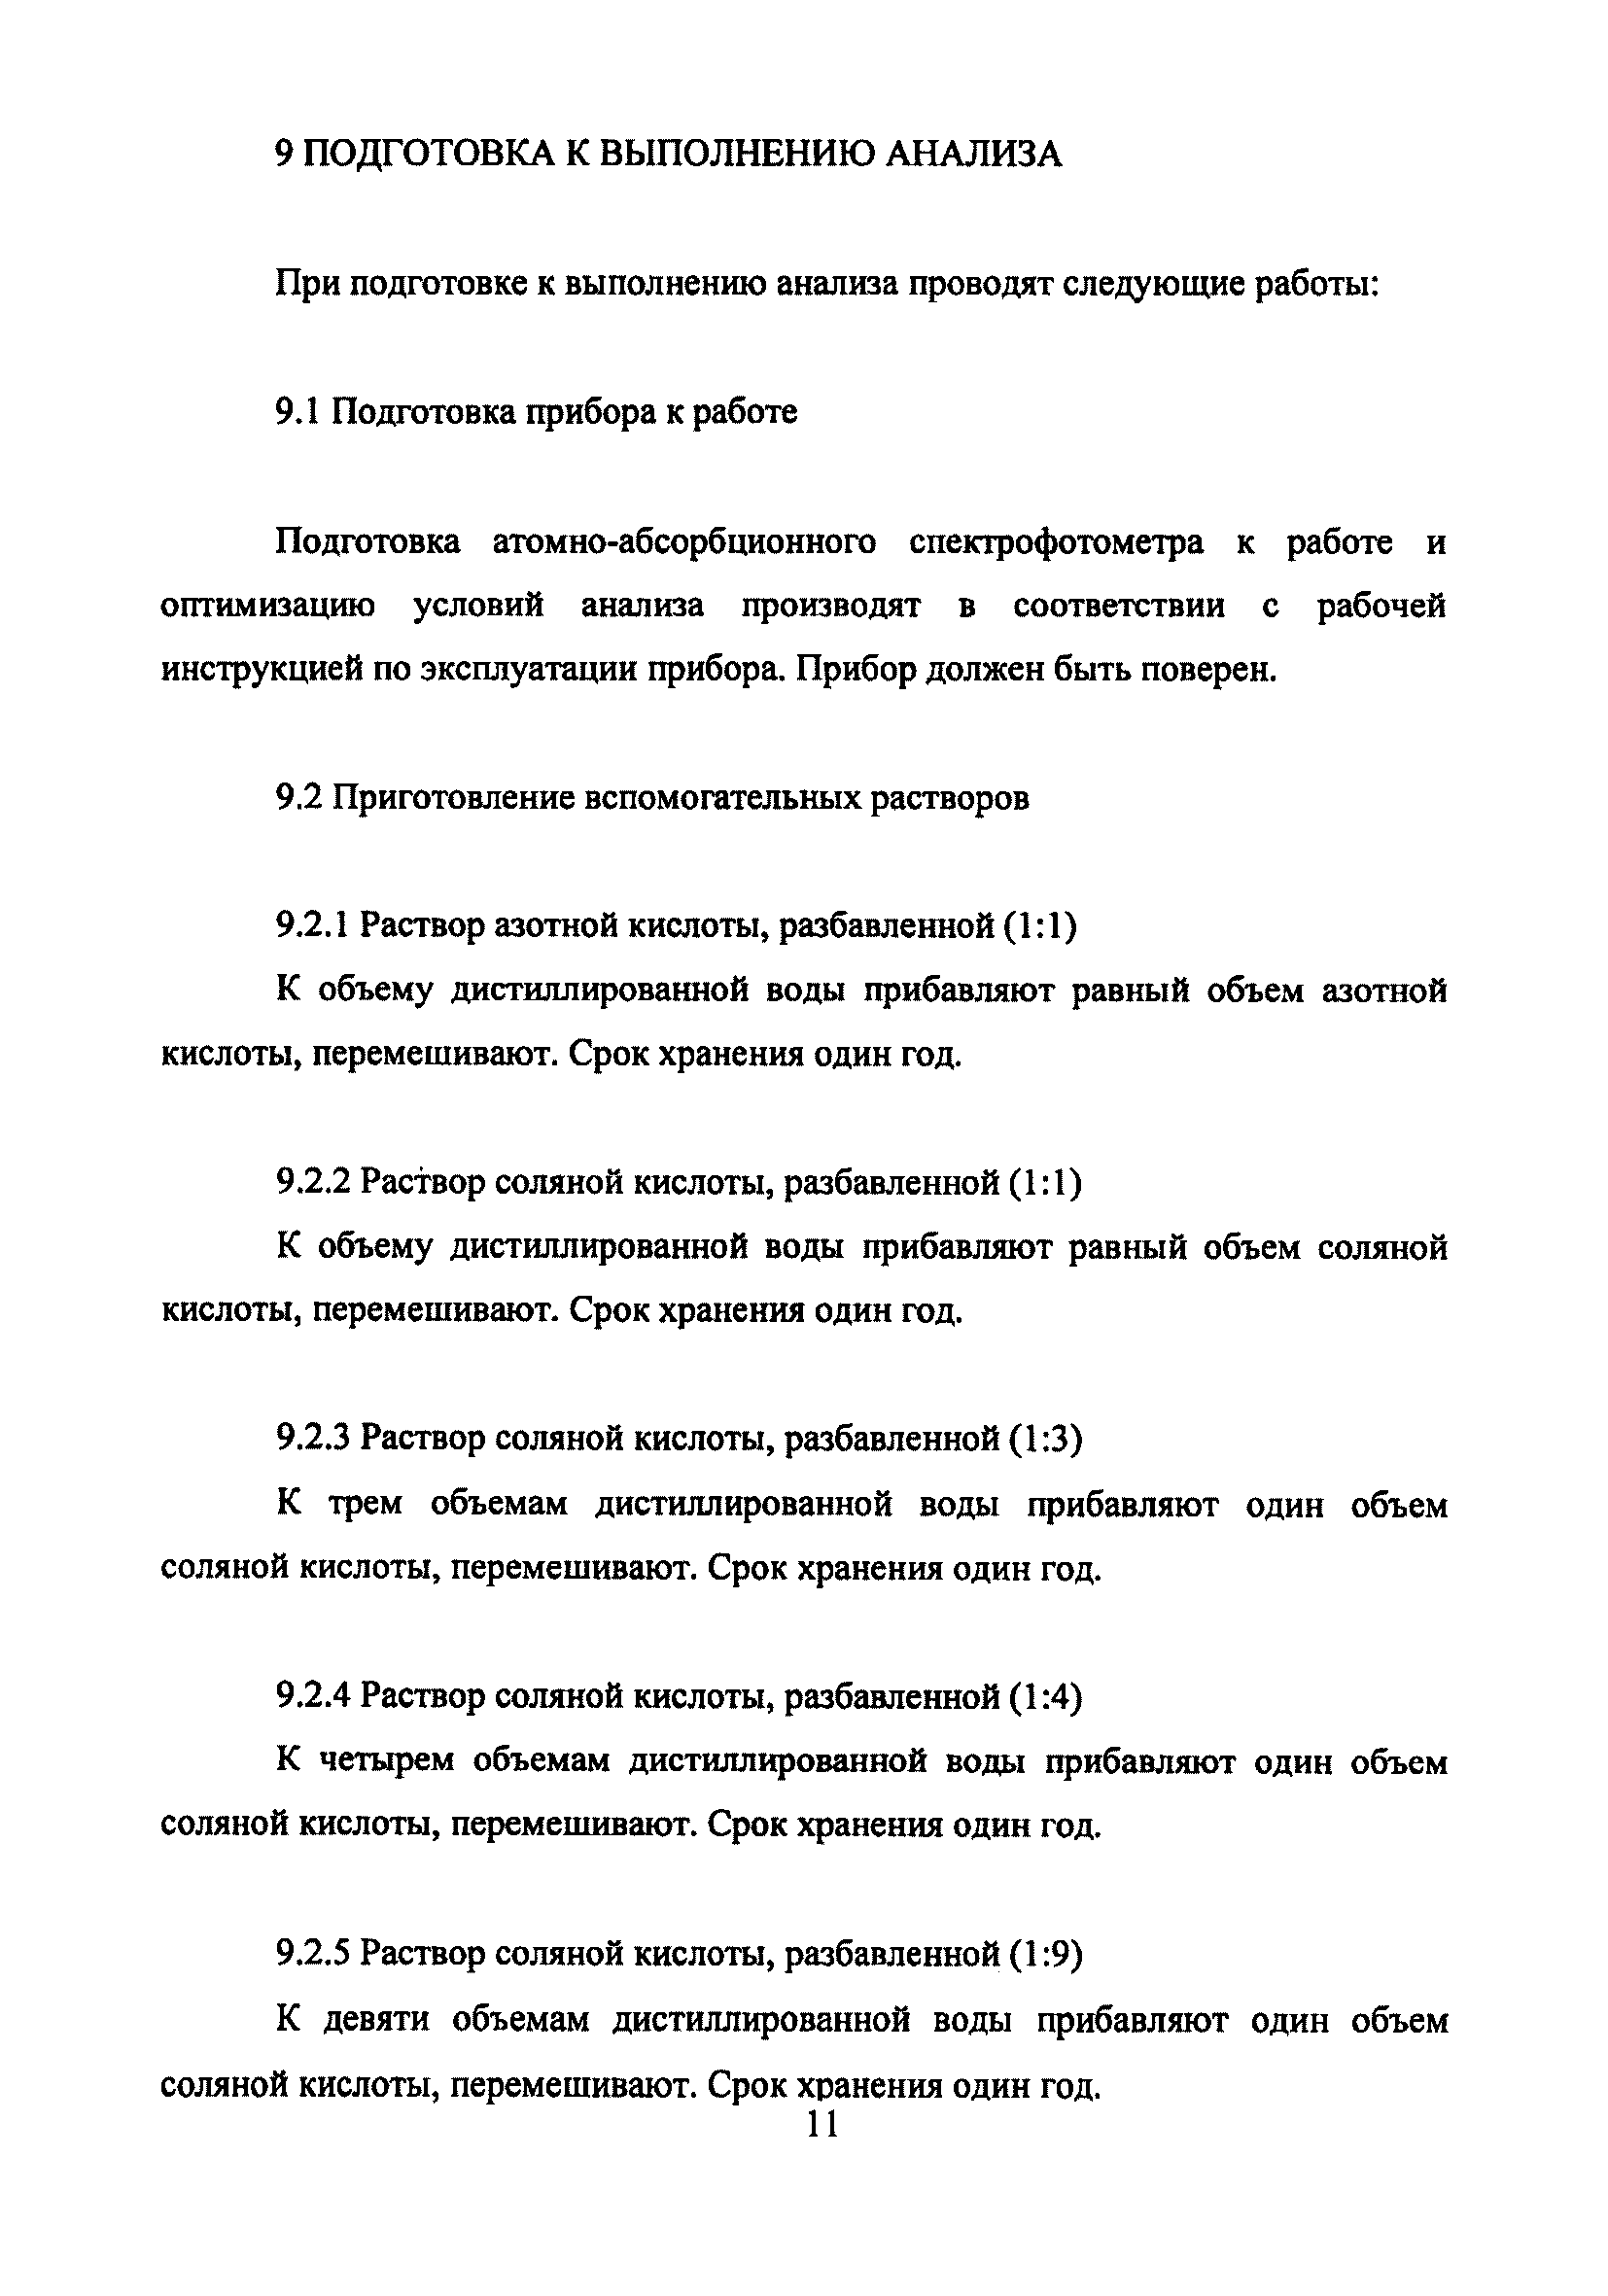 Методика НСАМ 108-Х